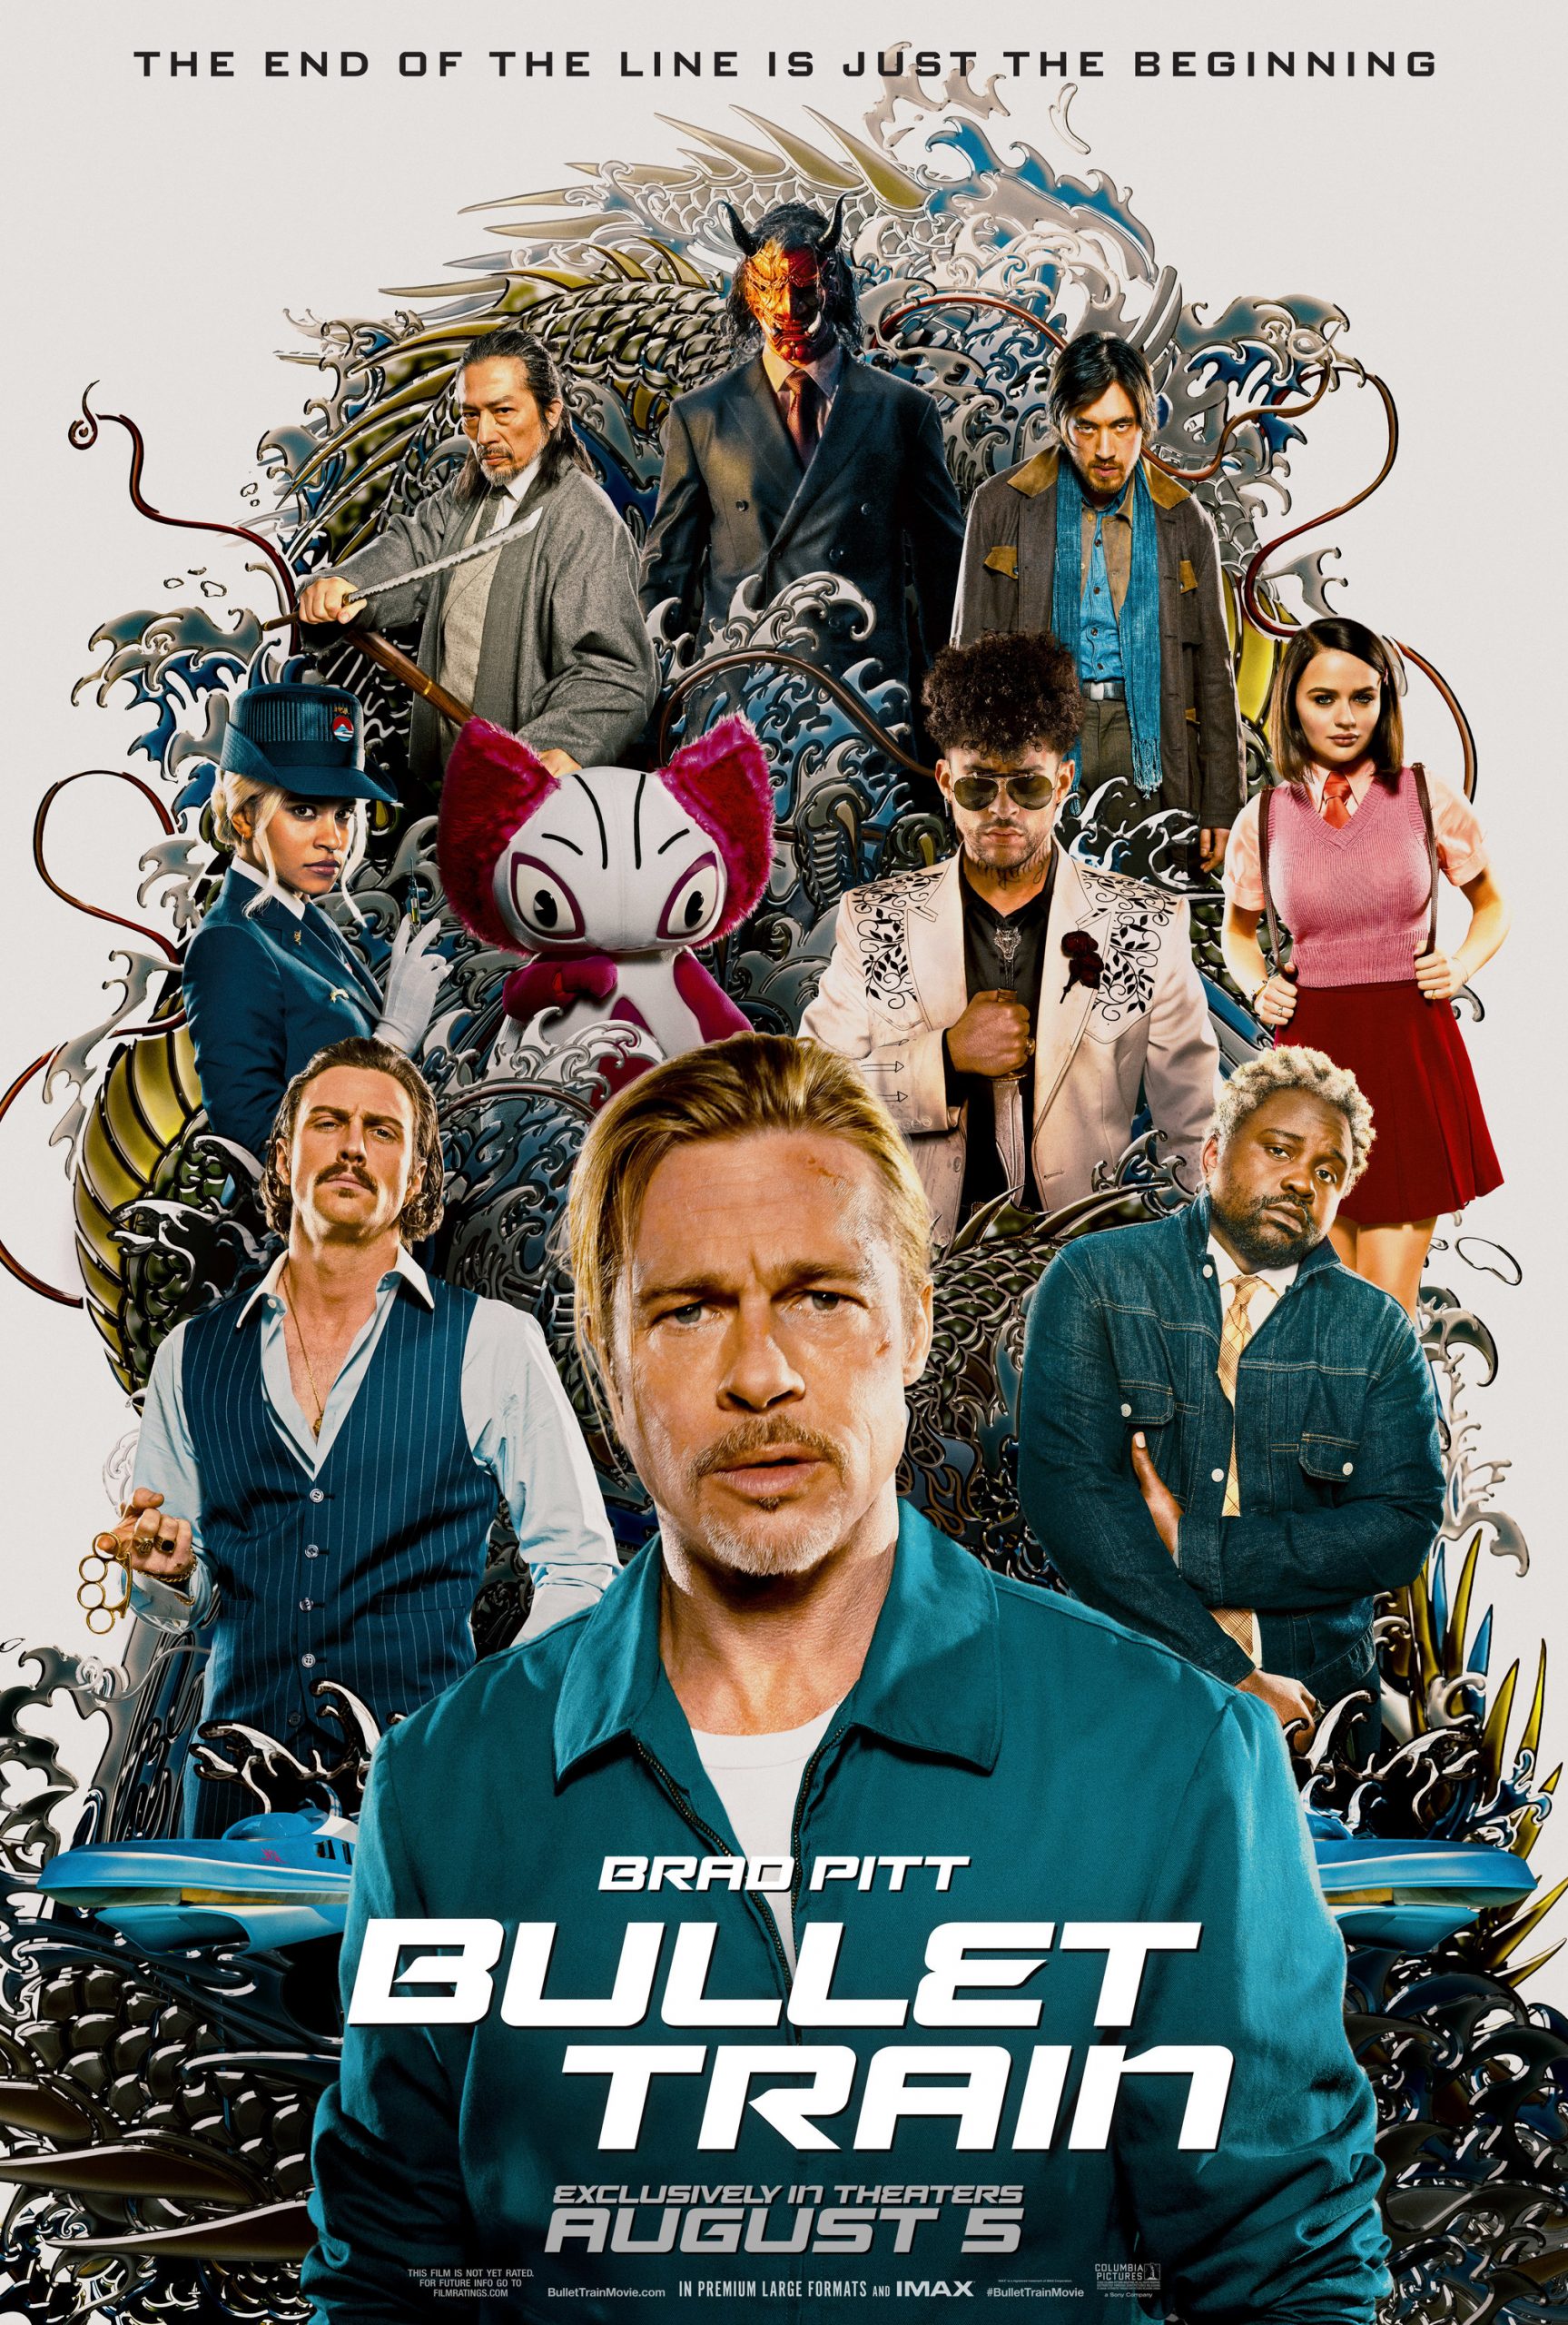 Bullet Train (2022) Film Review; Brad Pitt stars again.